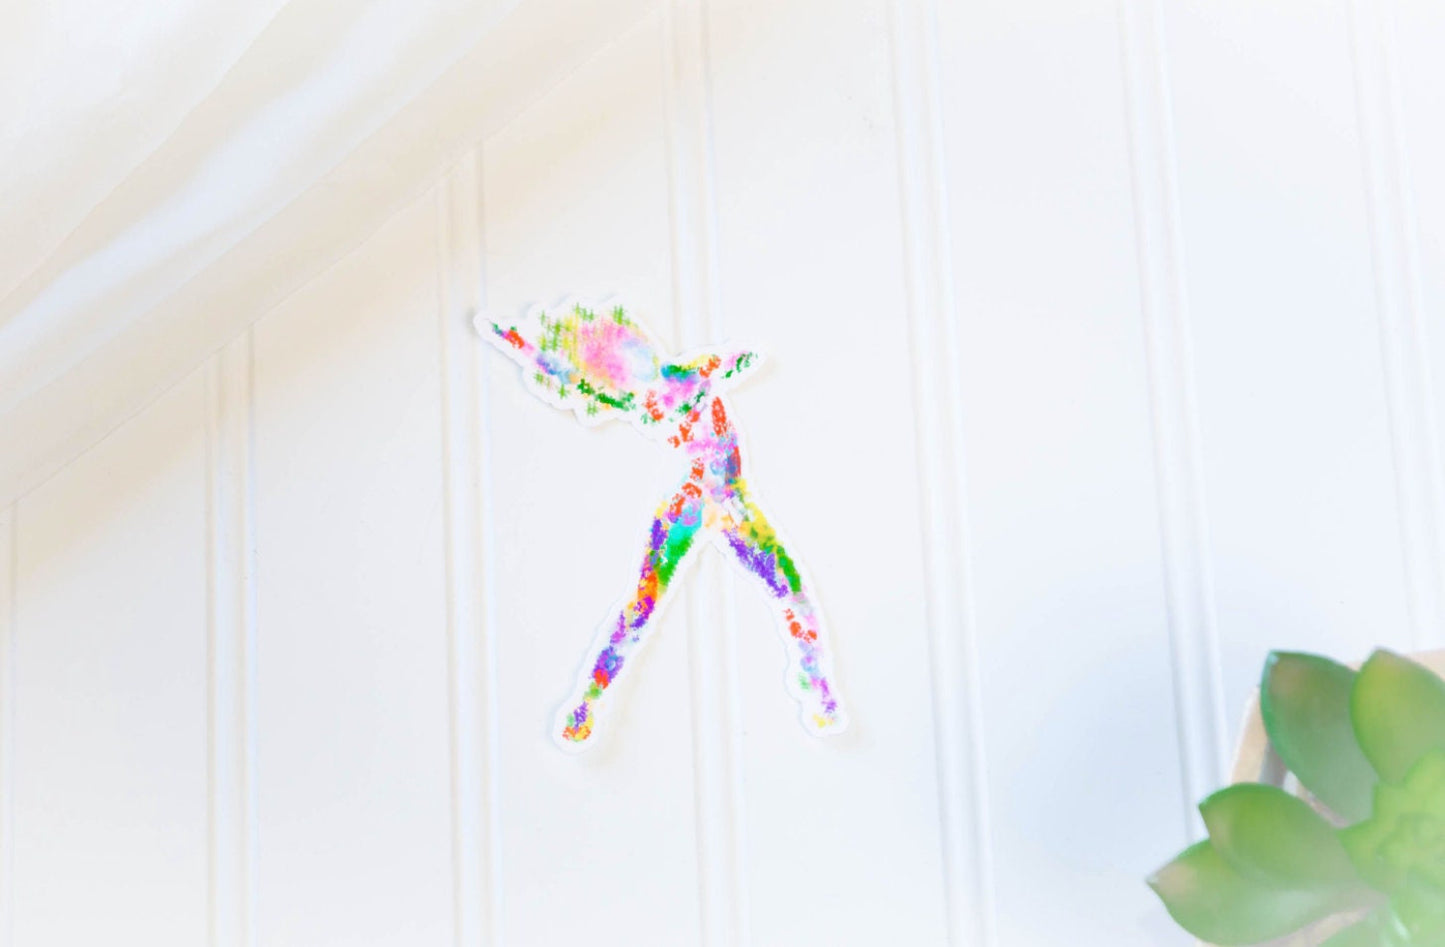 Paint Splash Dancer 4 Sticker, Vinyl Decal, Laptop Sticker, Dance Sticker, Gifts For Dancers, Ballet Gifts